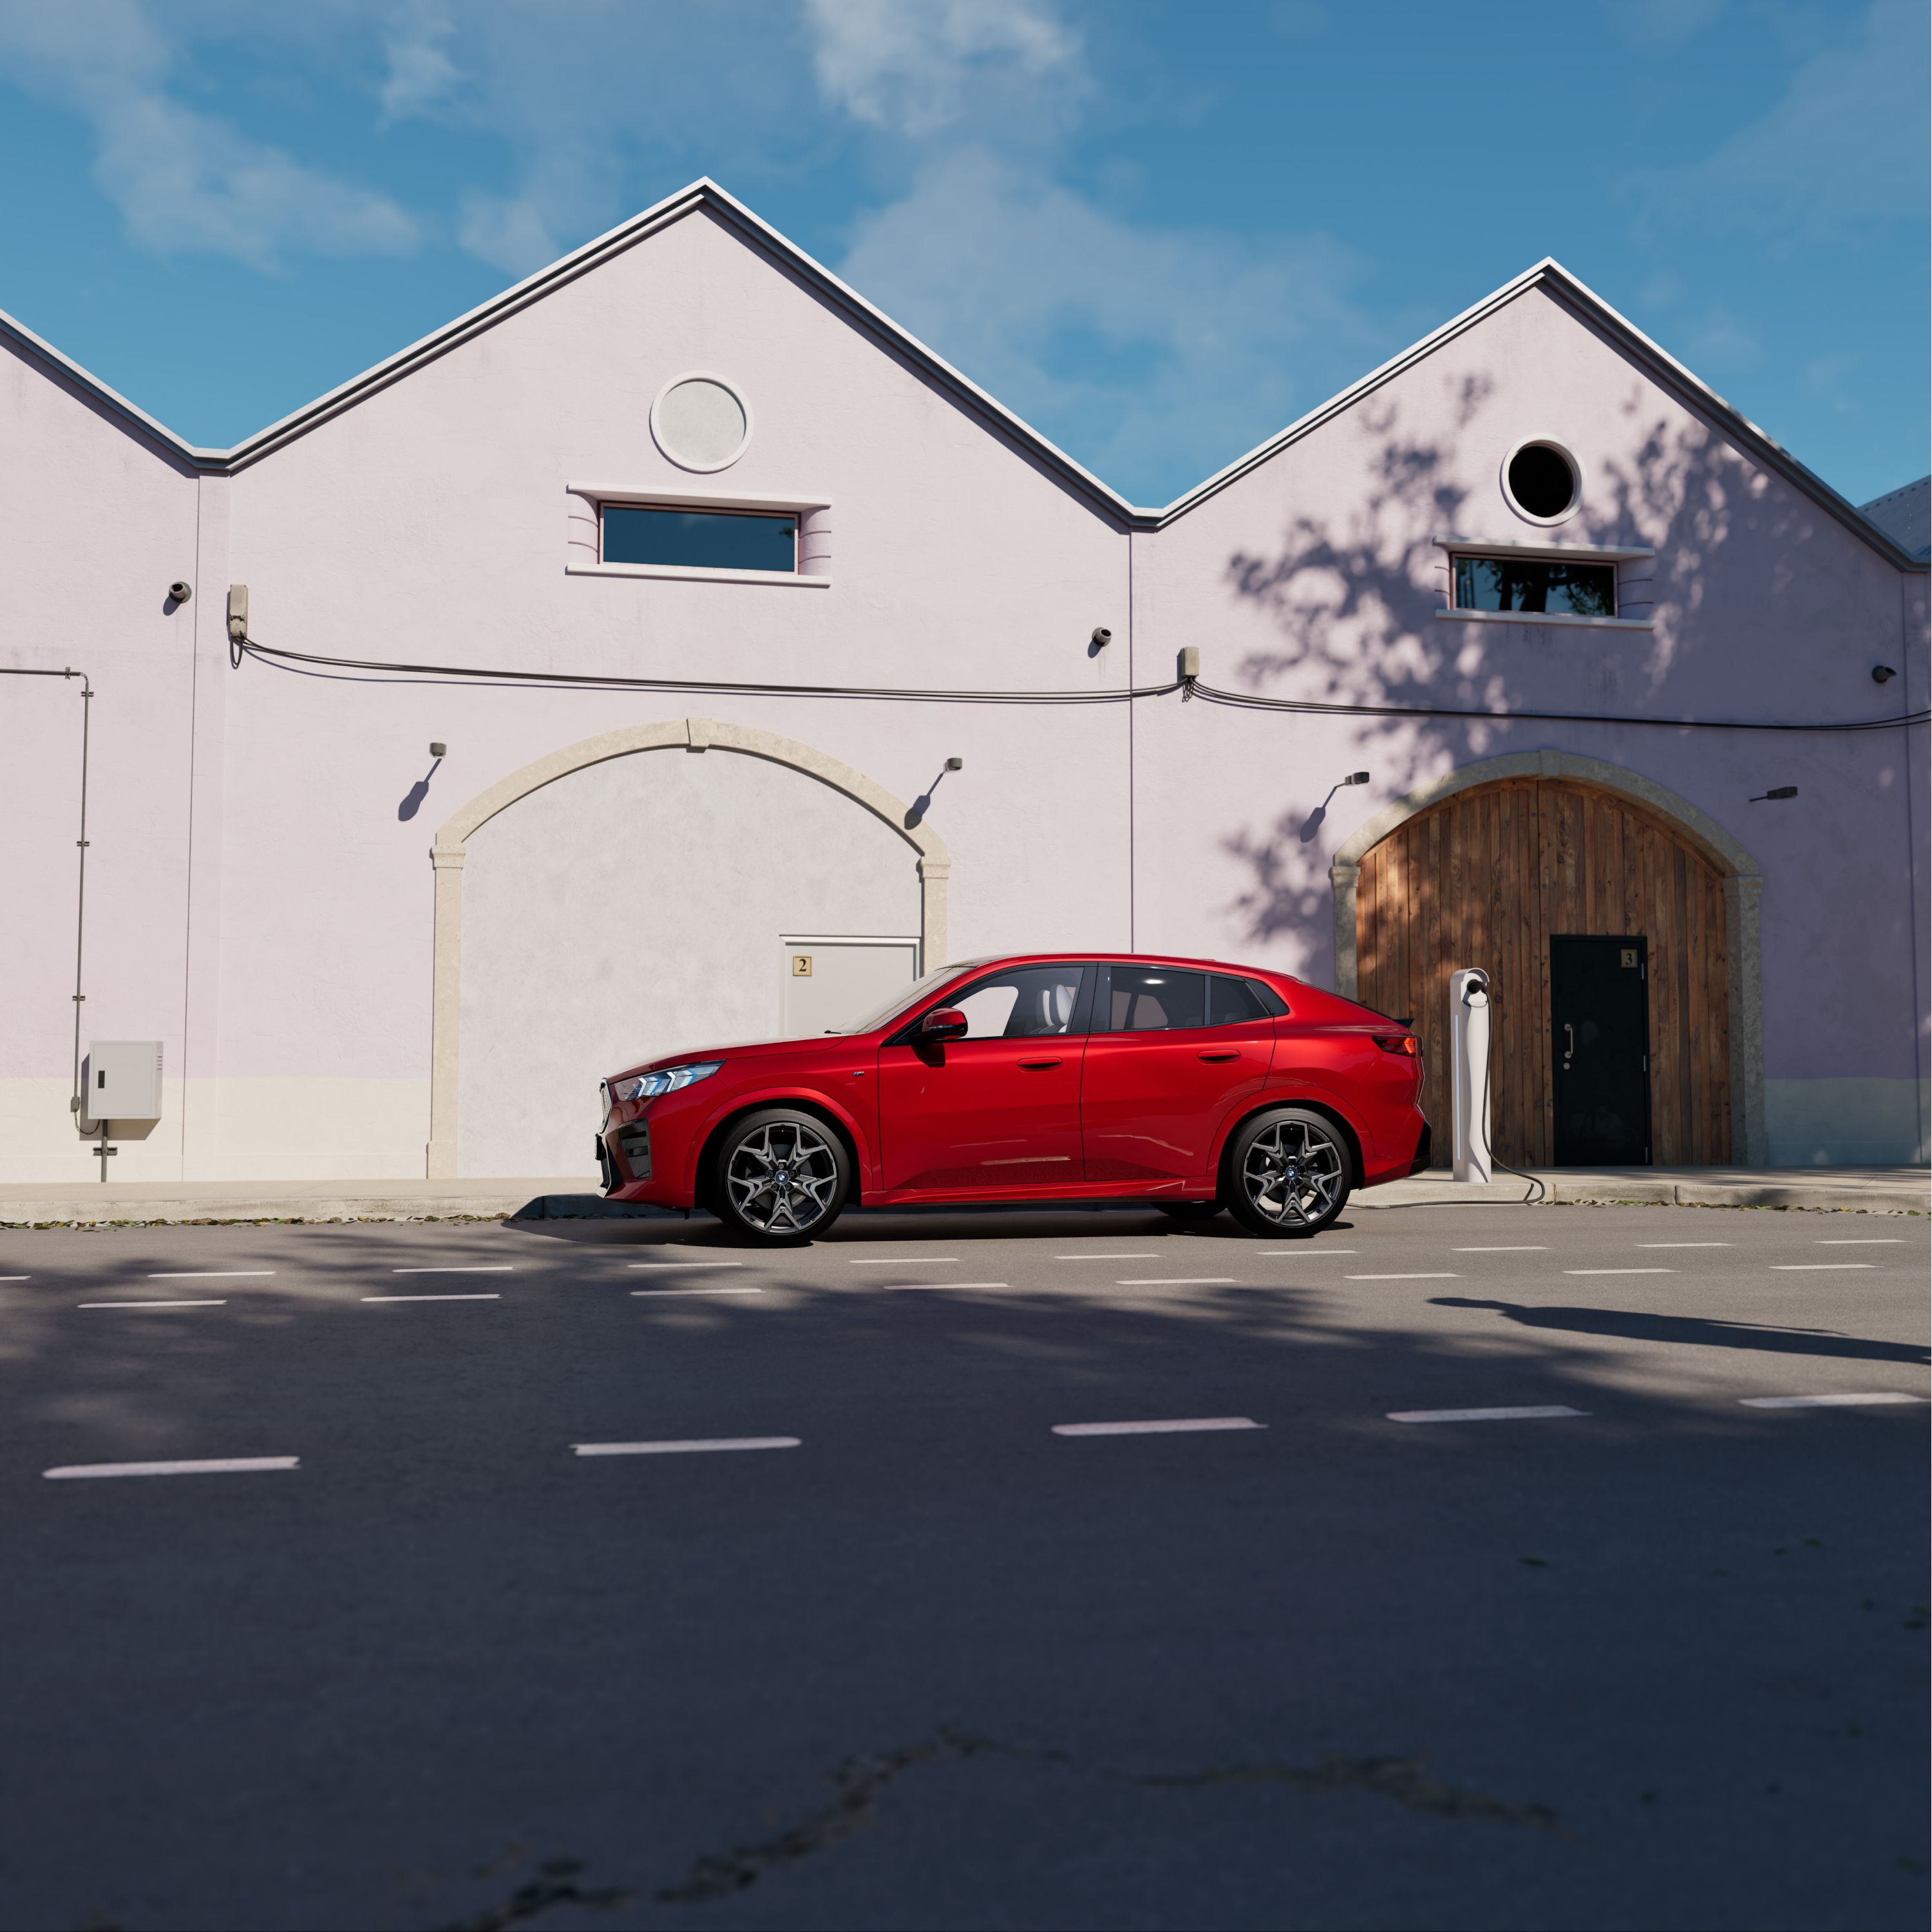 Crveni BMW iX2 Dragonfire crvene boje parkiran ispred seoske kuće po sunčanom vremenu